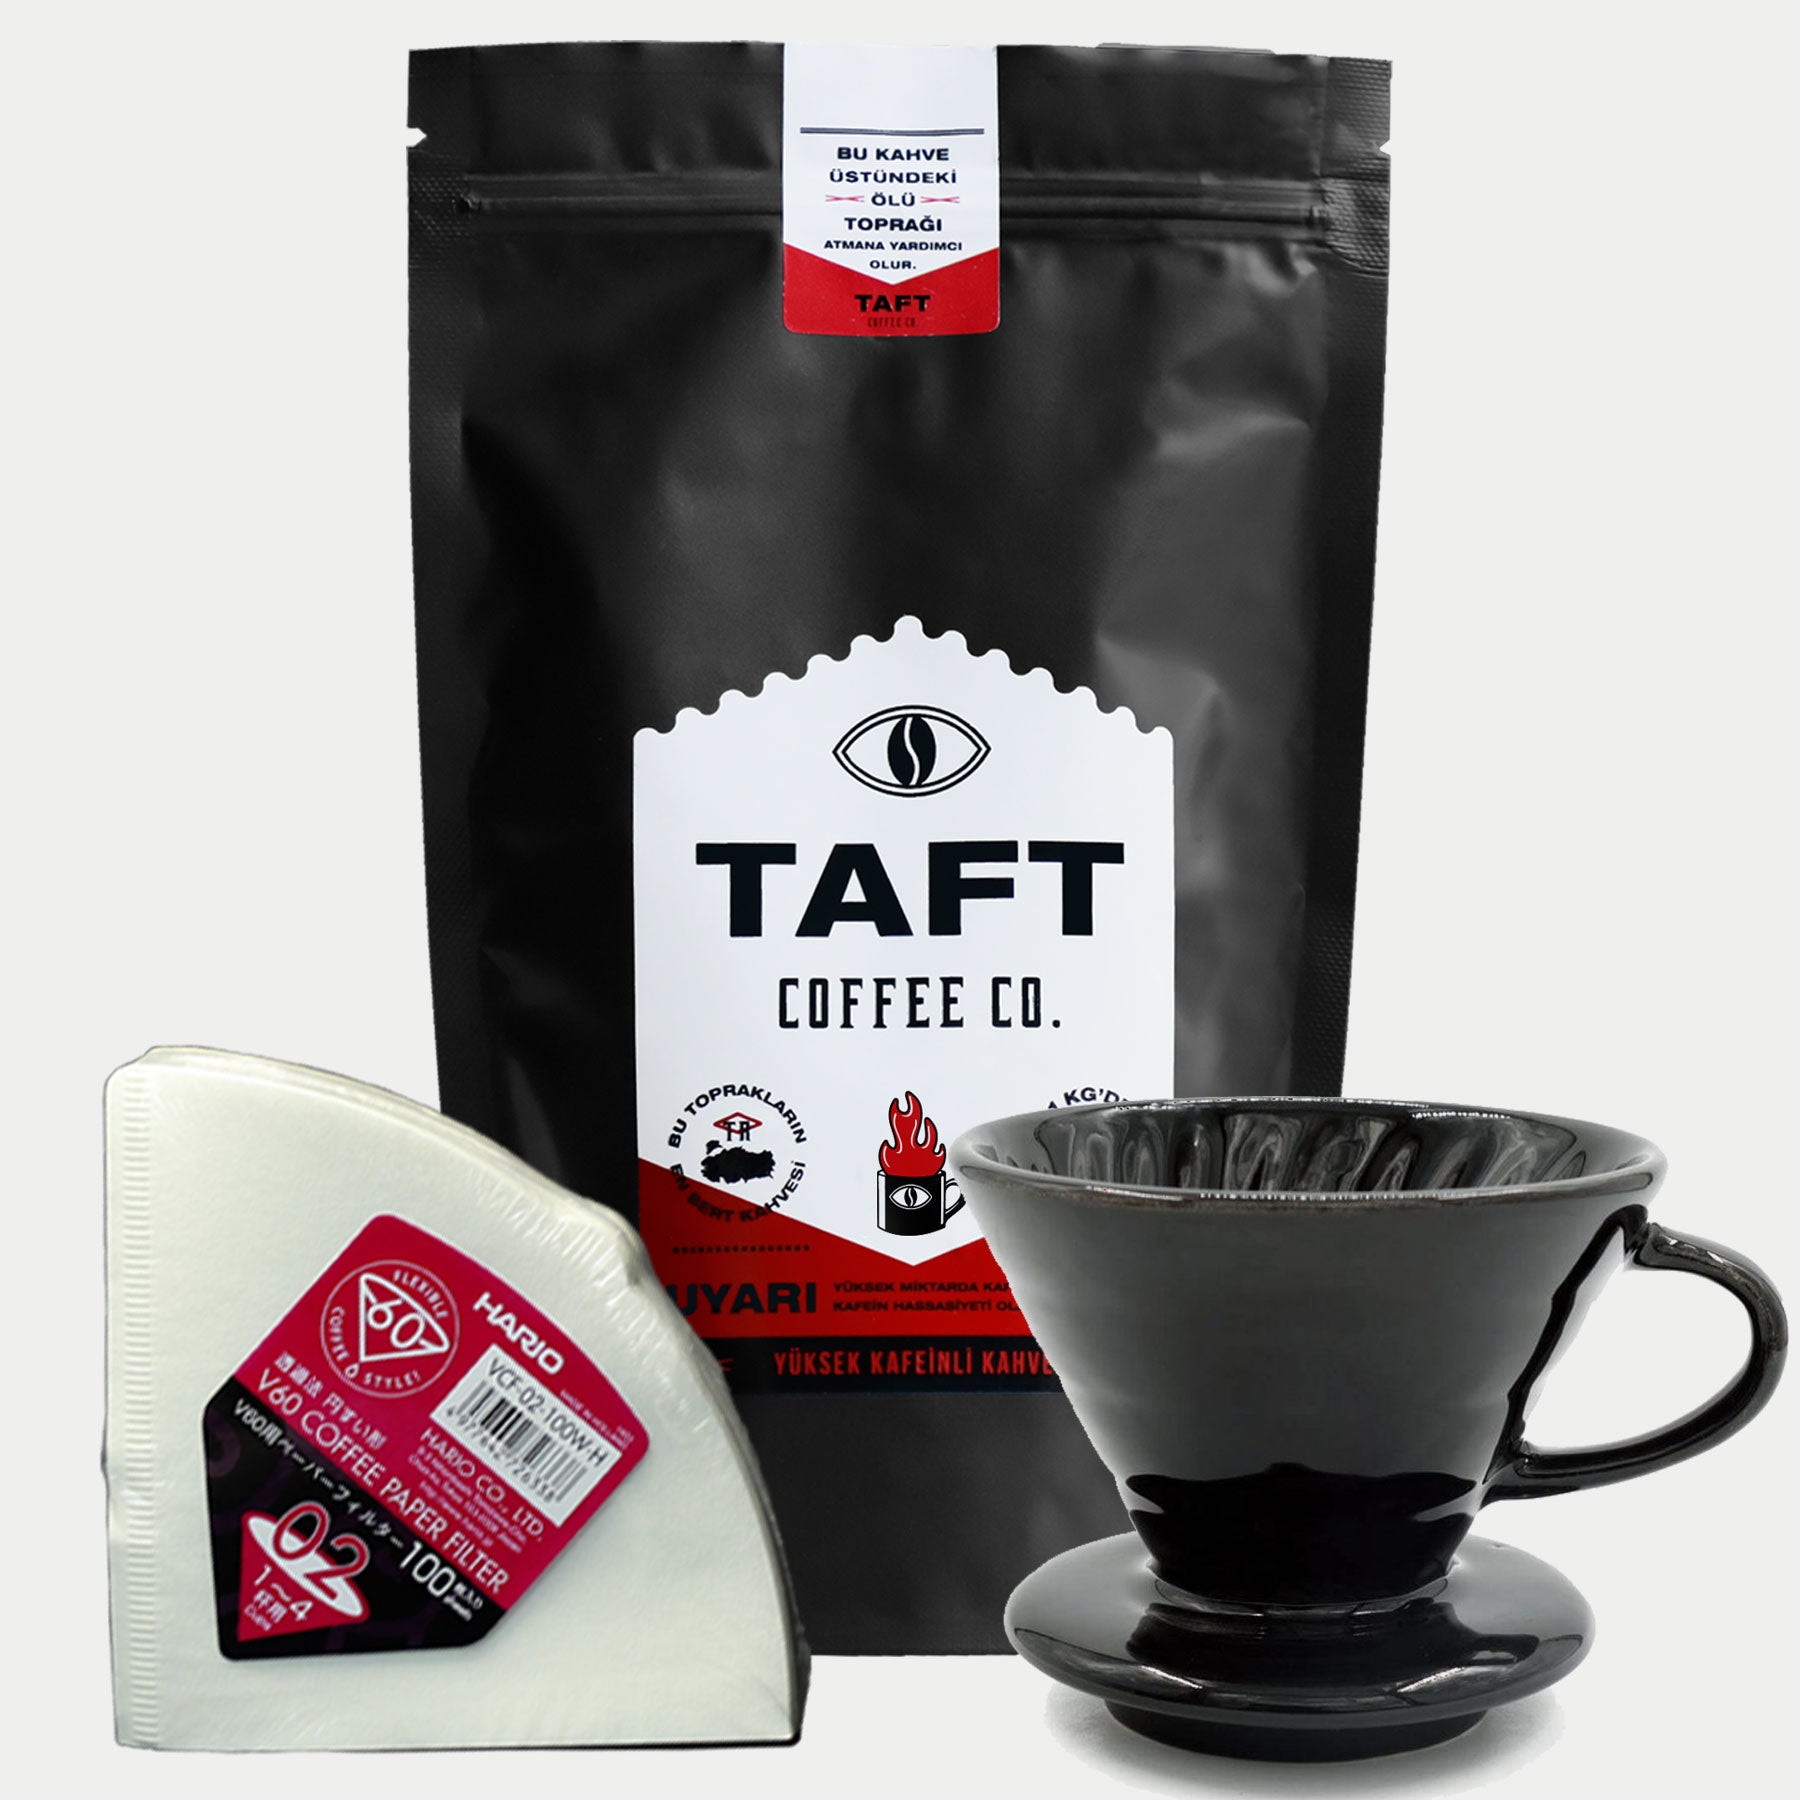 TAFT Coffee Yüksek Kafeinli siyah v60 Filtre Kahve Seti 250gr